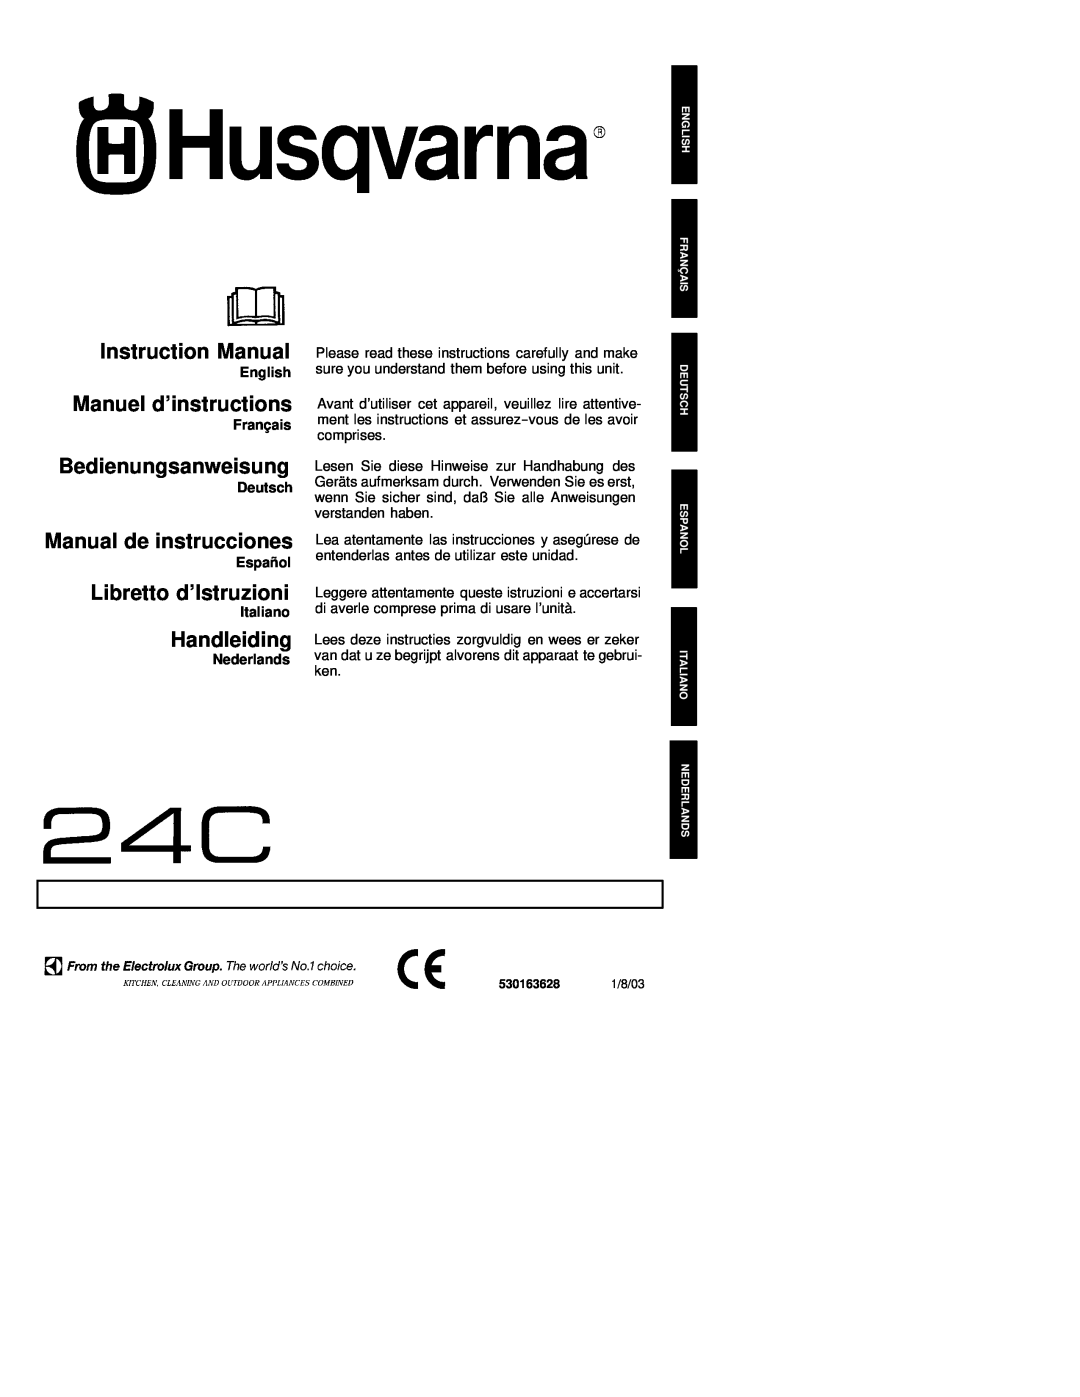 Husqvarna 24C instruction manual Manuel d’instructions, Bedienungsanweisung, Manual de instrucciones, Handleiding 